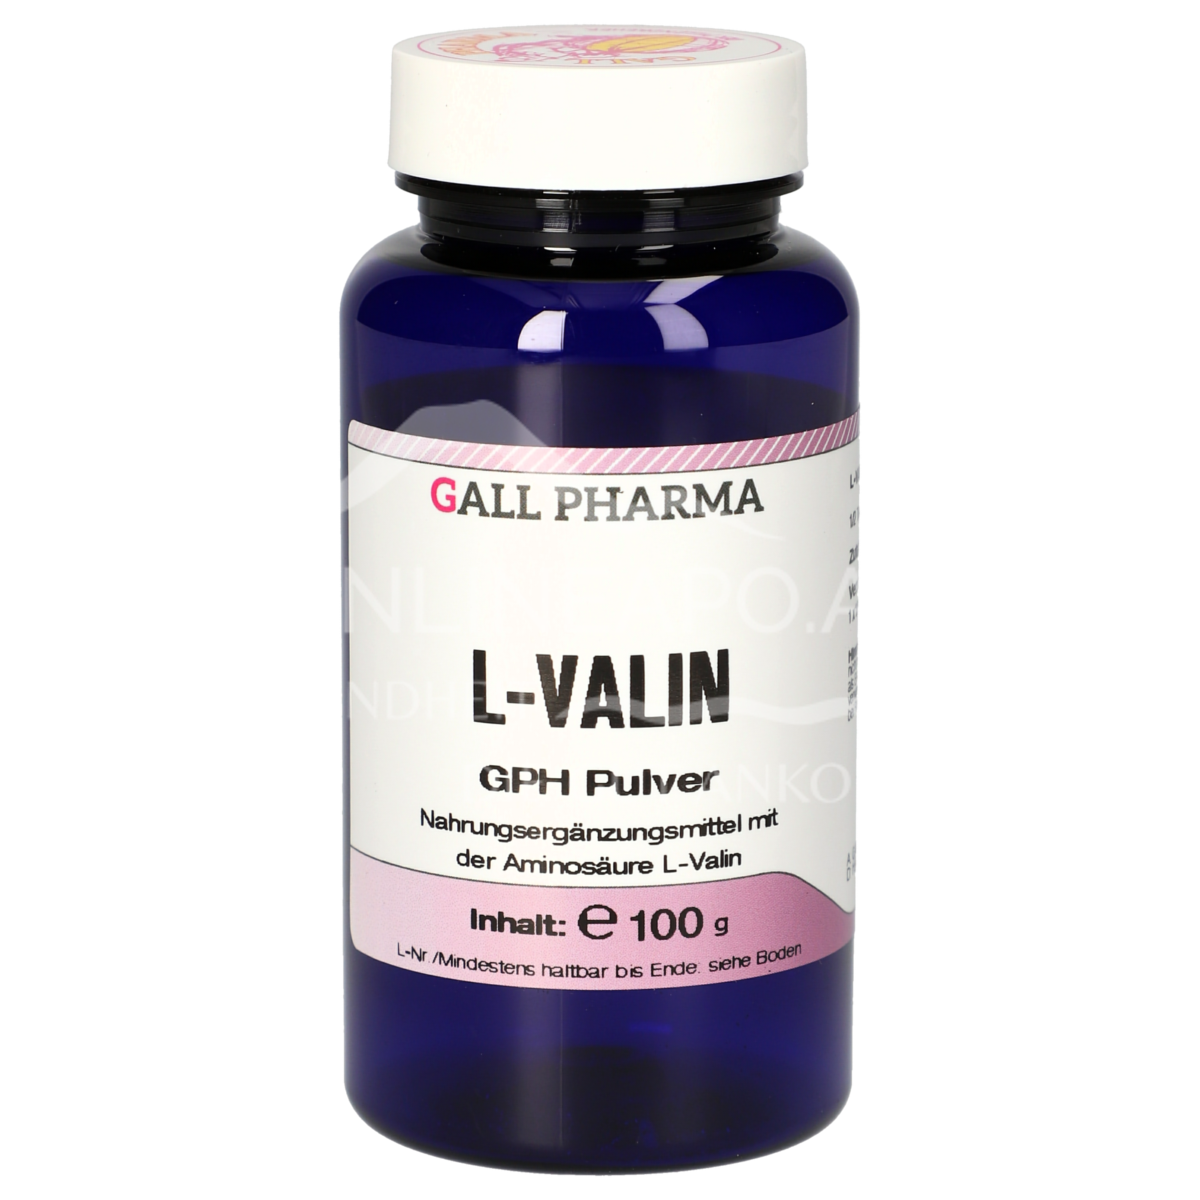 Gall Pharma L-Valin Pulver